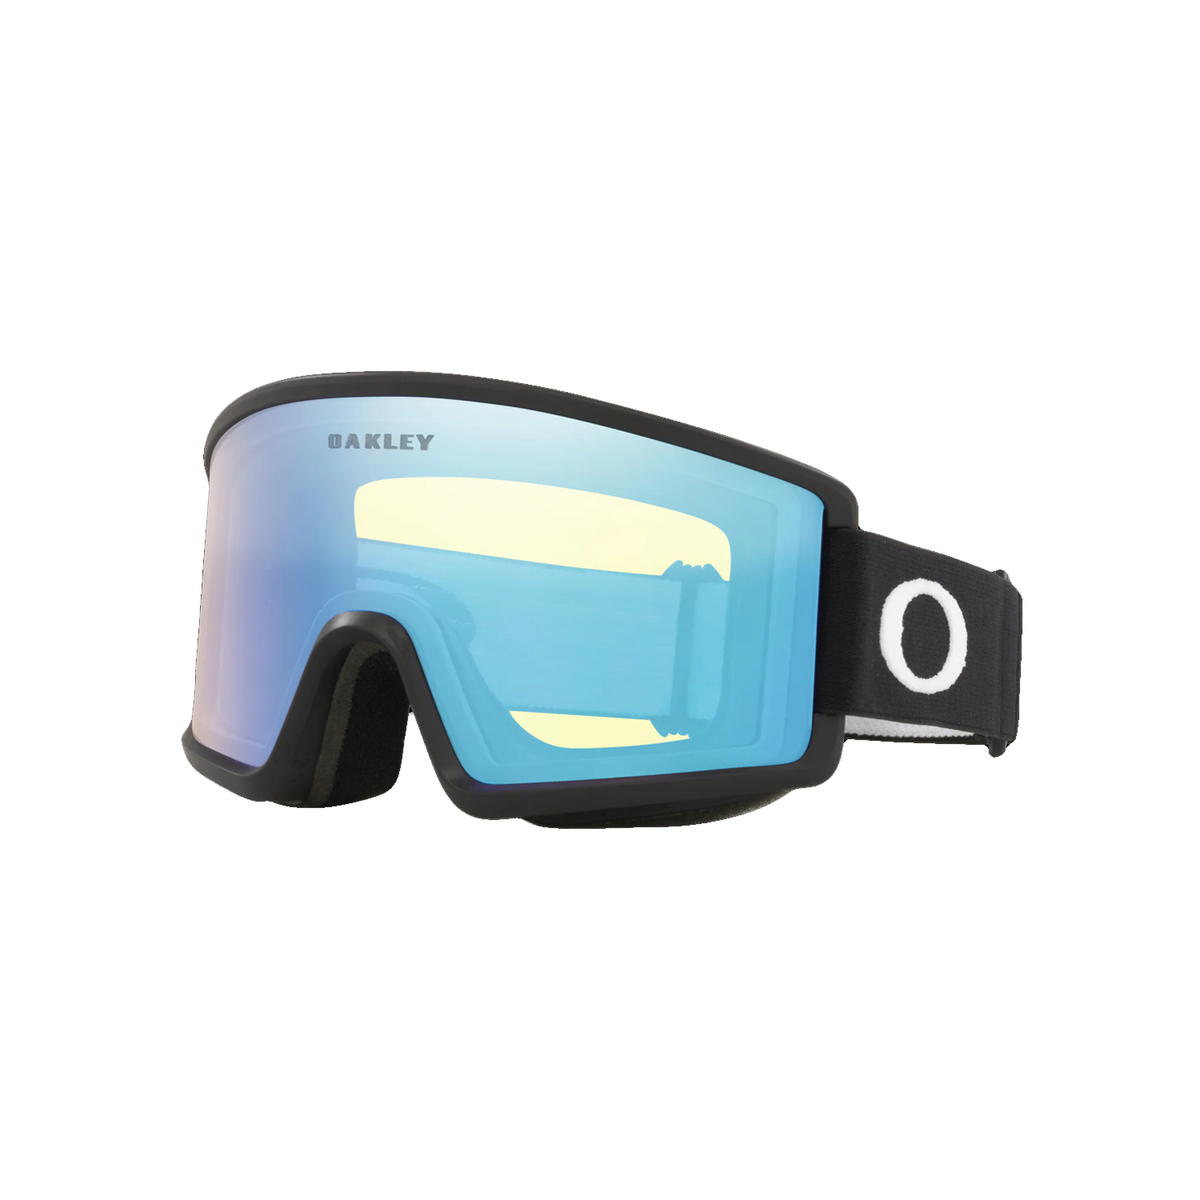 Oakley Target Line L Goggles Matte Black/HI Yellow Iridium + Dark